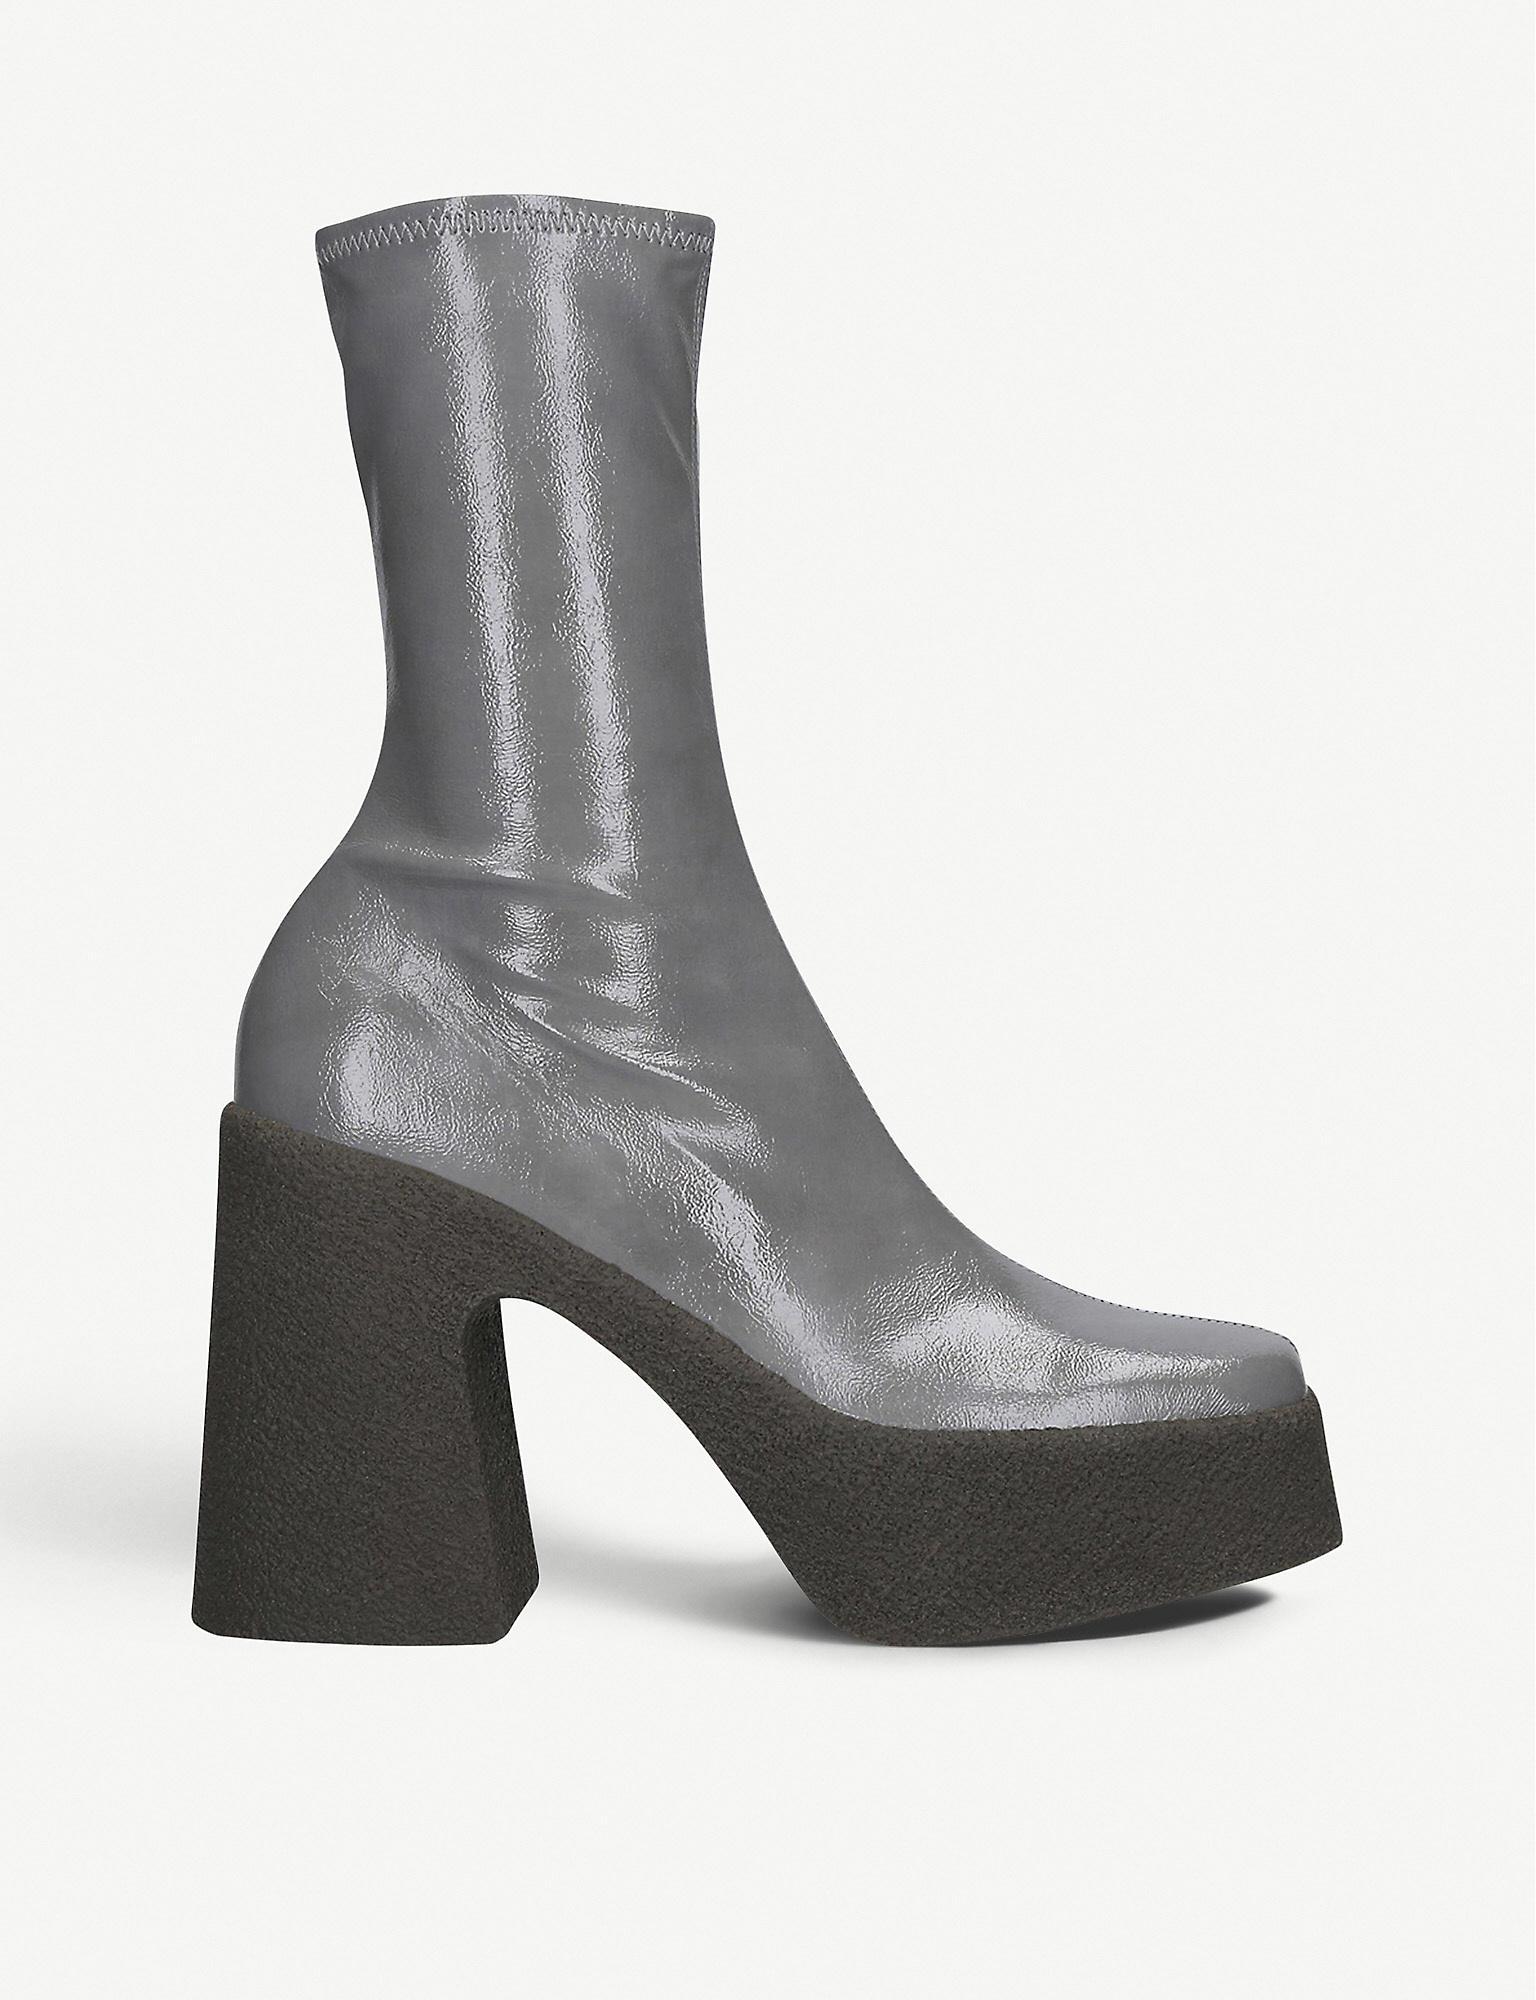 Stella McCartney Platform Ankle Boots in Gray | Lyst